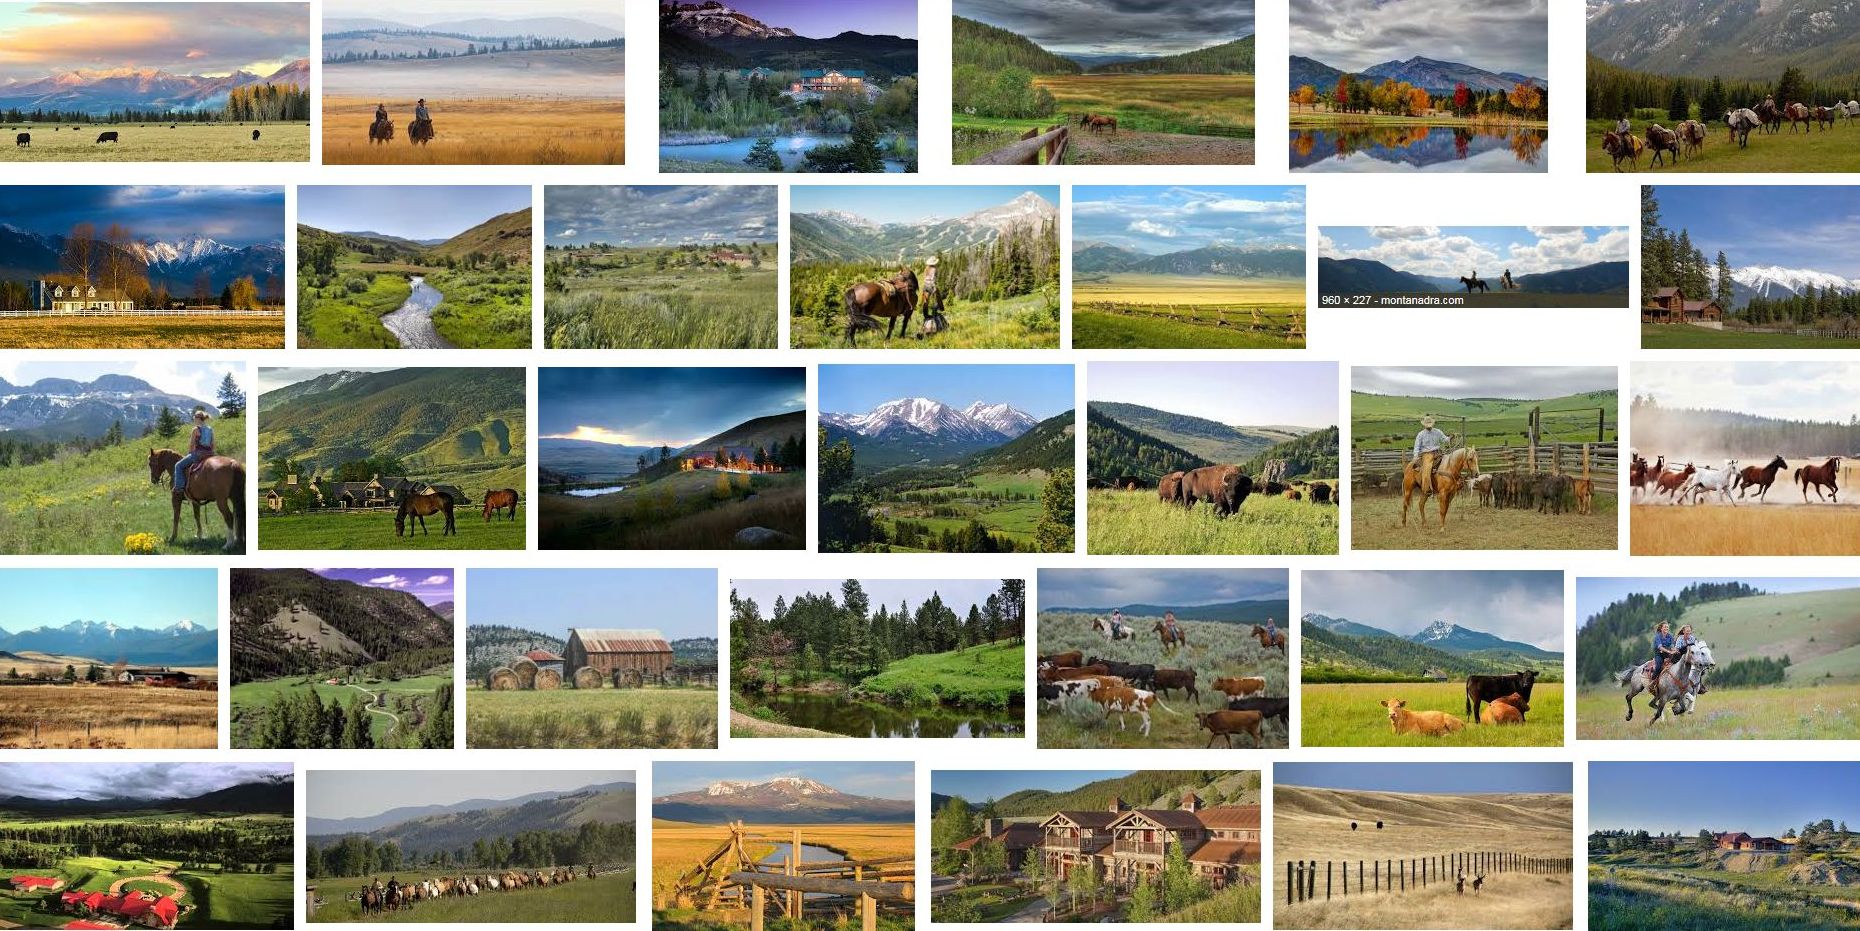 Montana Ranch Listings $900,000 To $1 Million